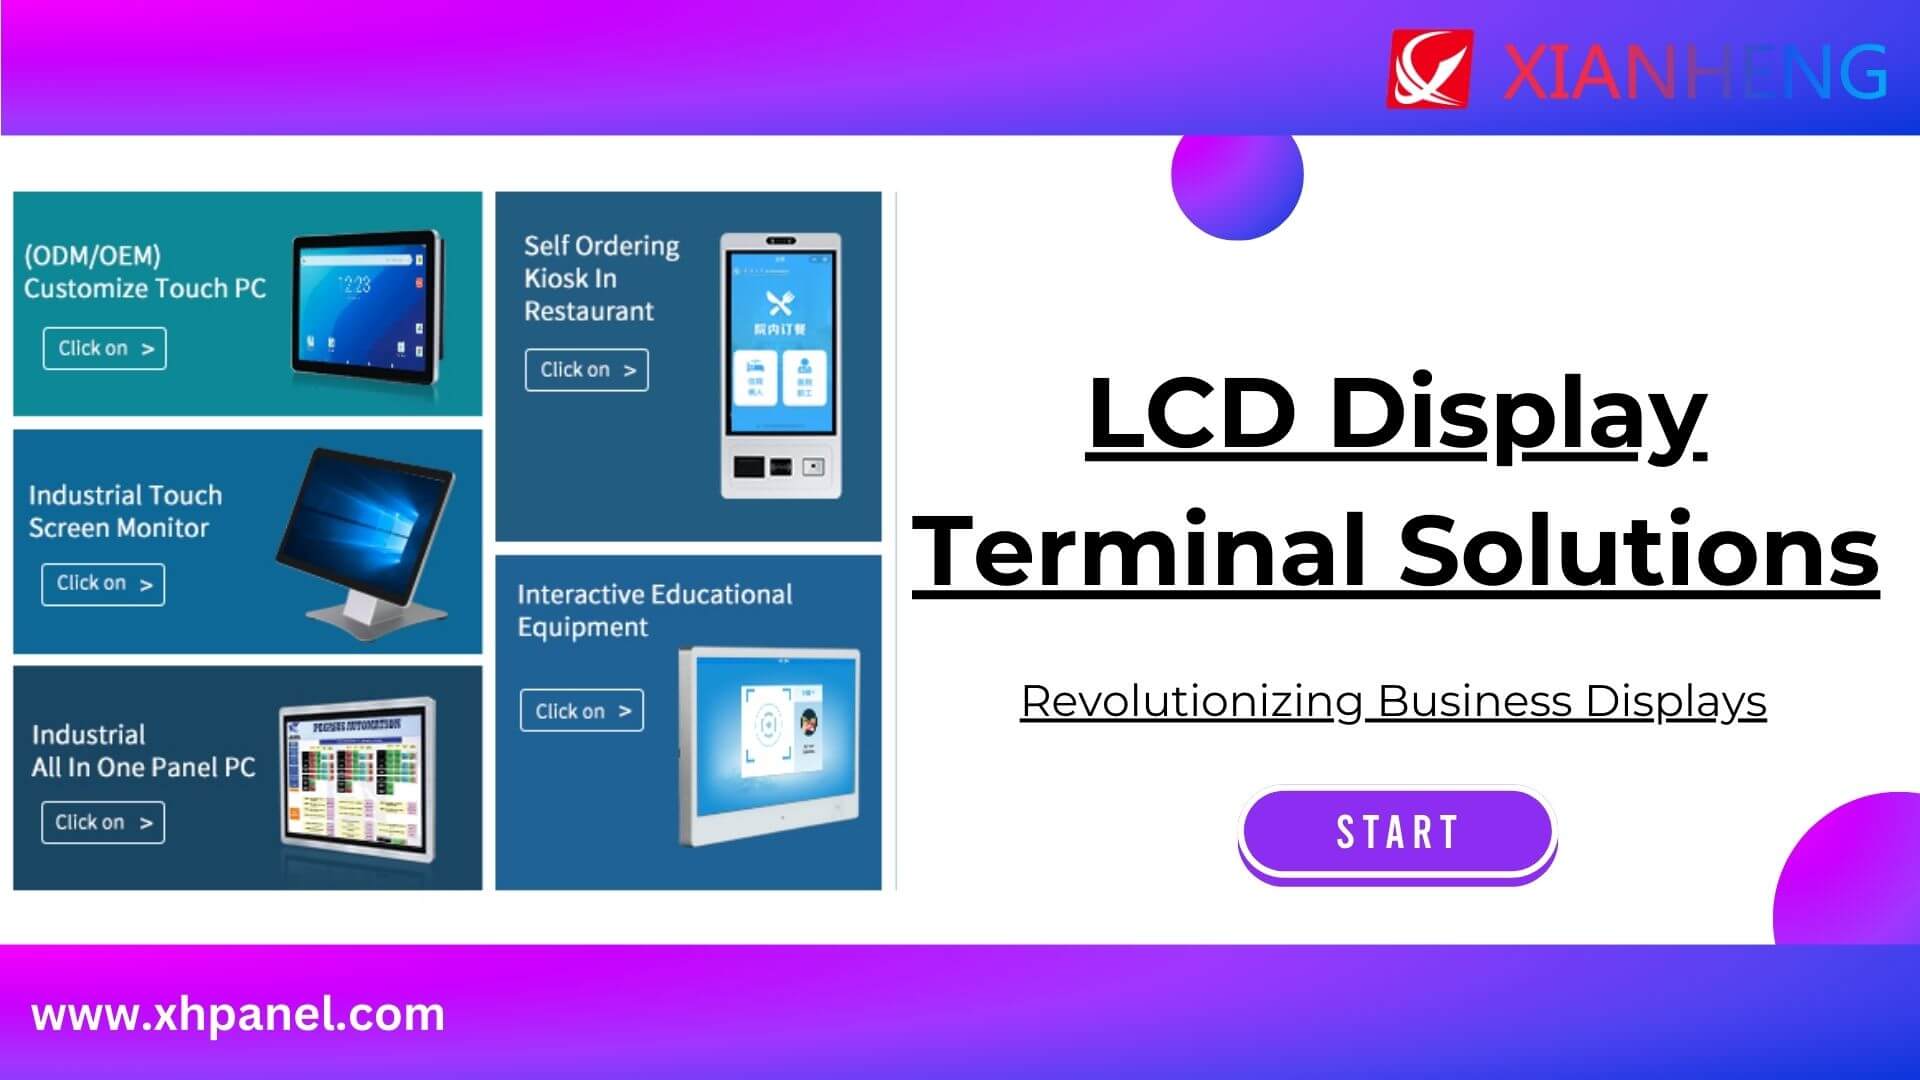 Display Terminal Solutions: Revolutionizing Business Displays